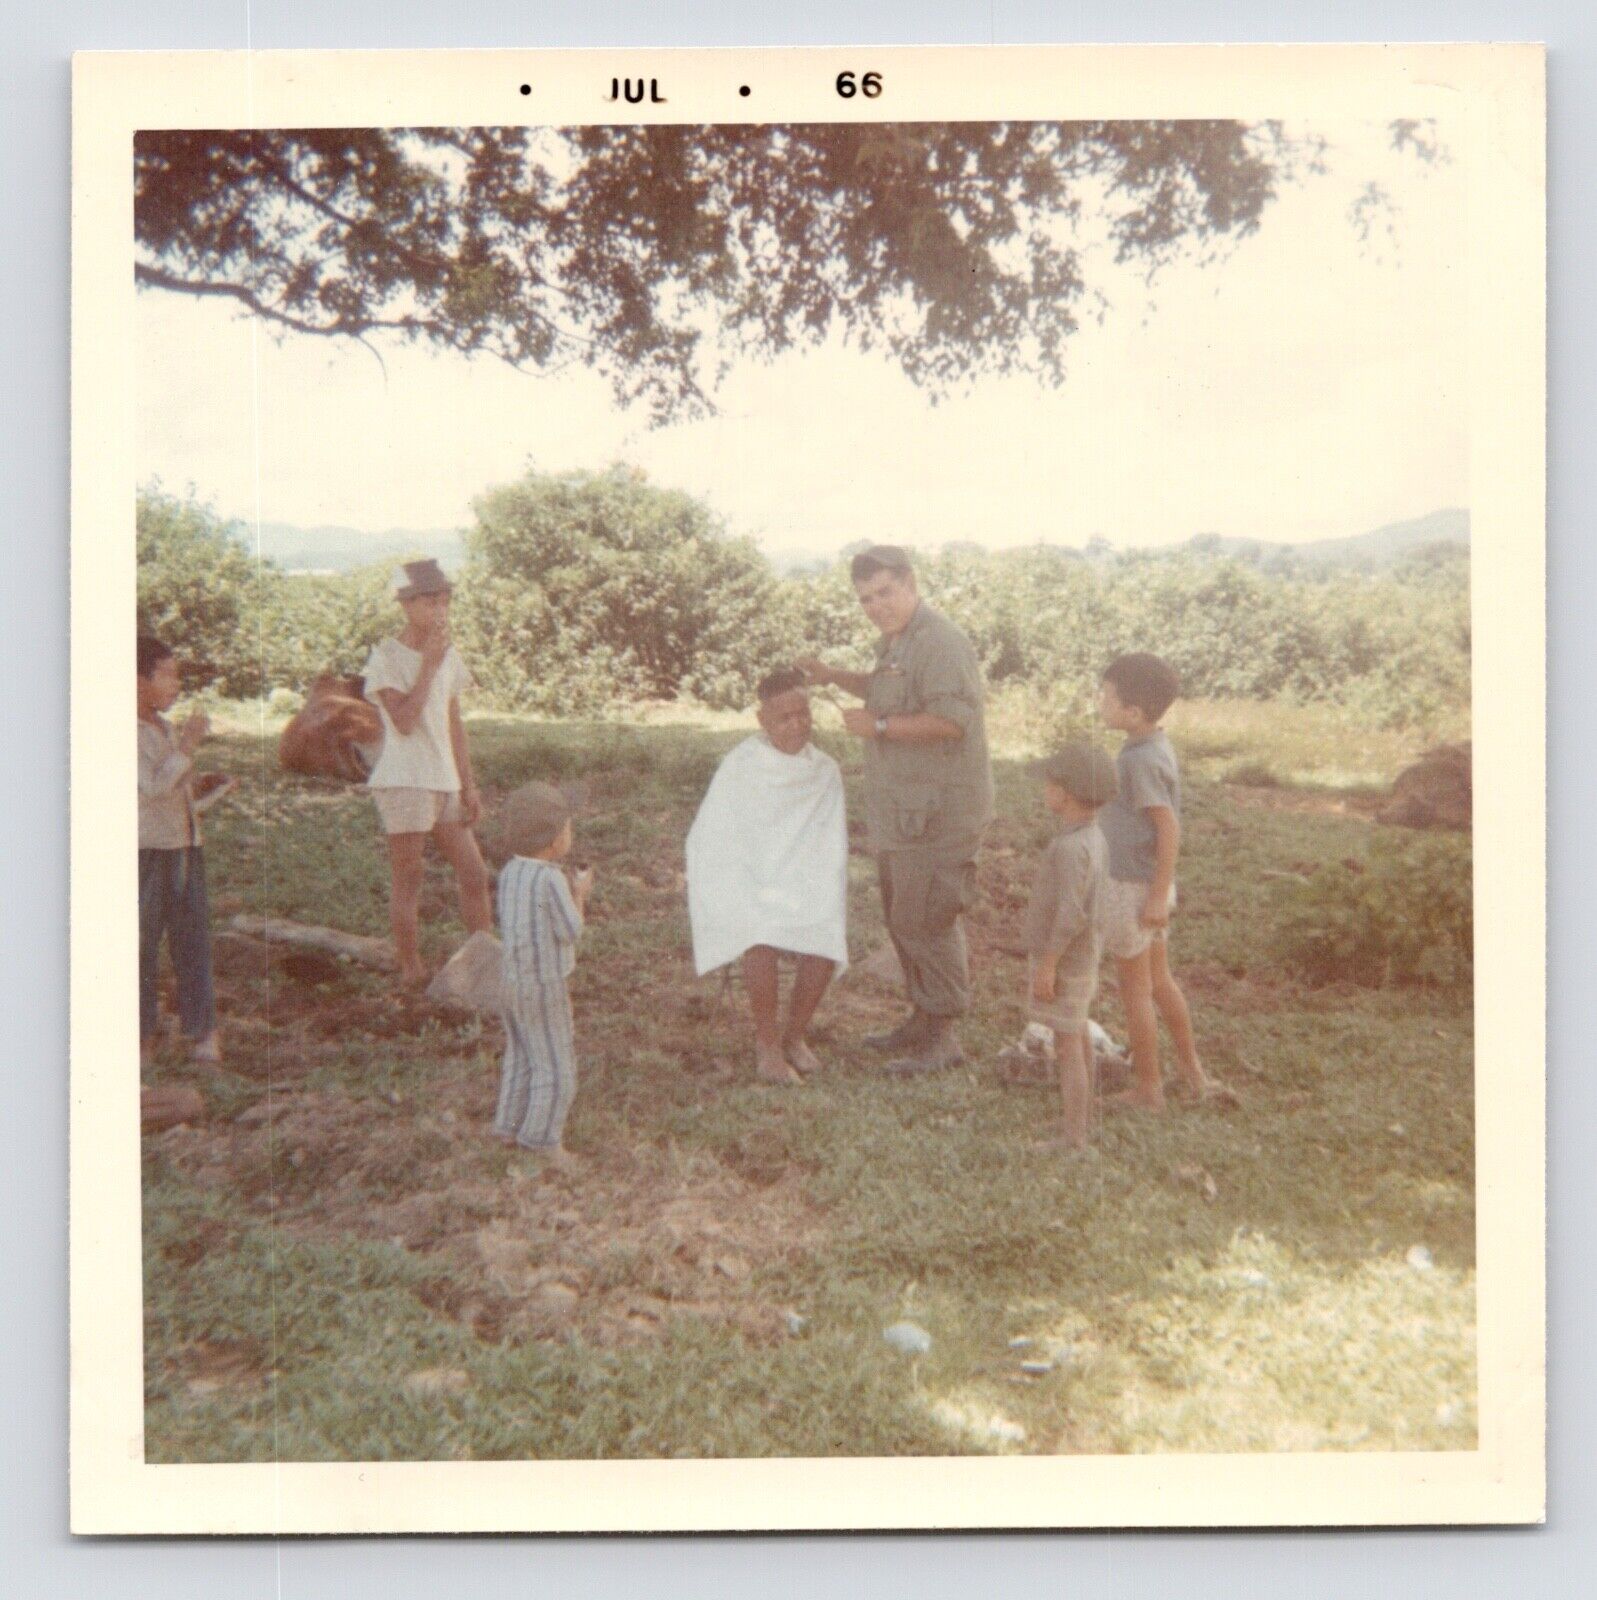 1966 Vietnam War US Army GI Cutting Villager\'s Hair Kids Original Vintage Photo